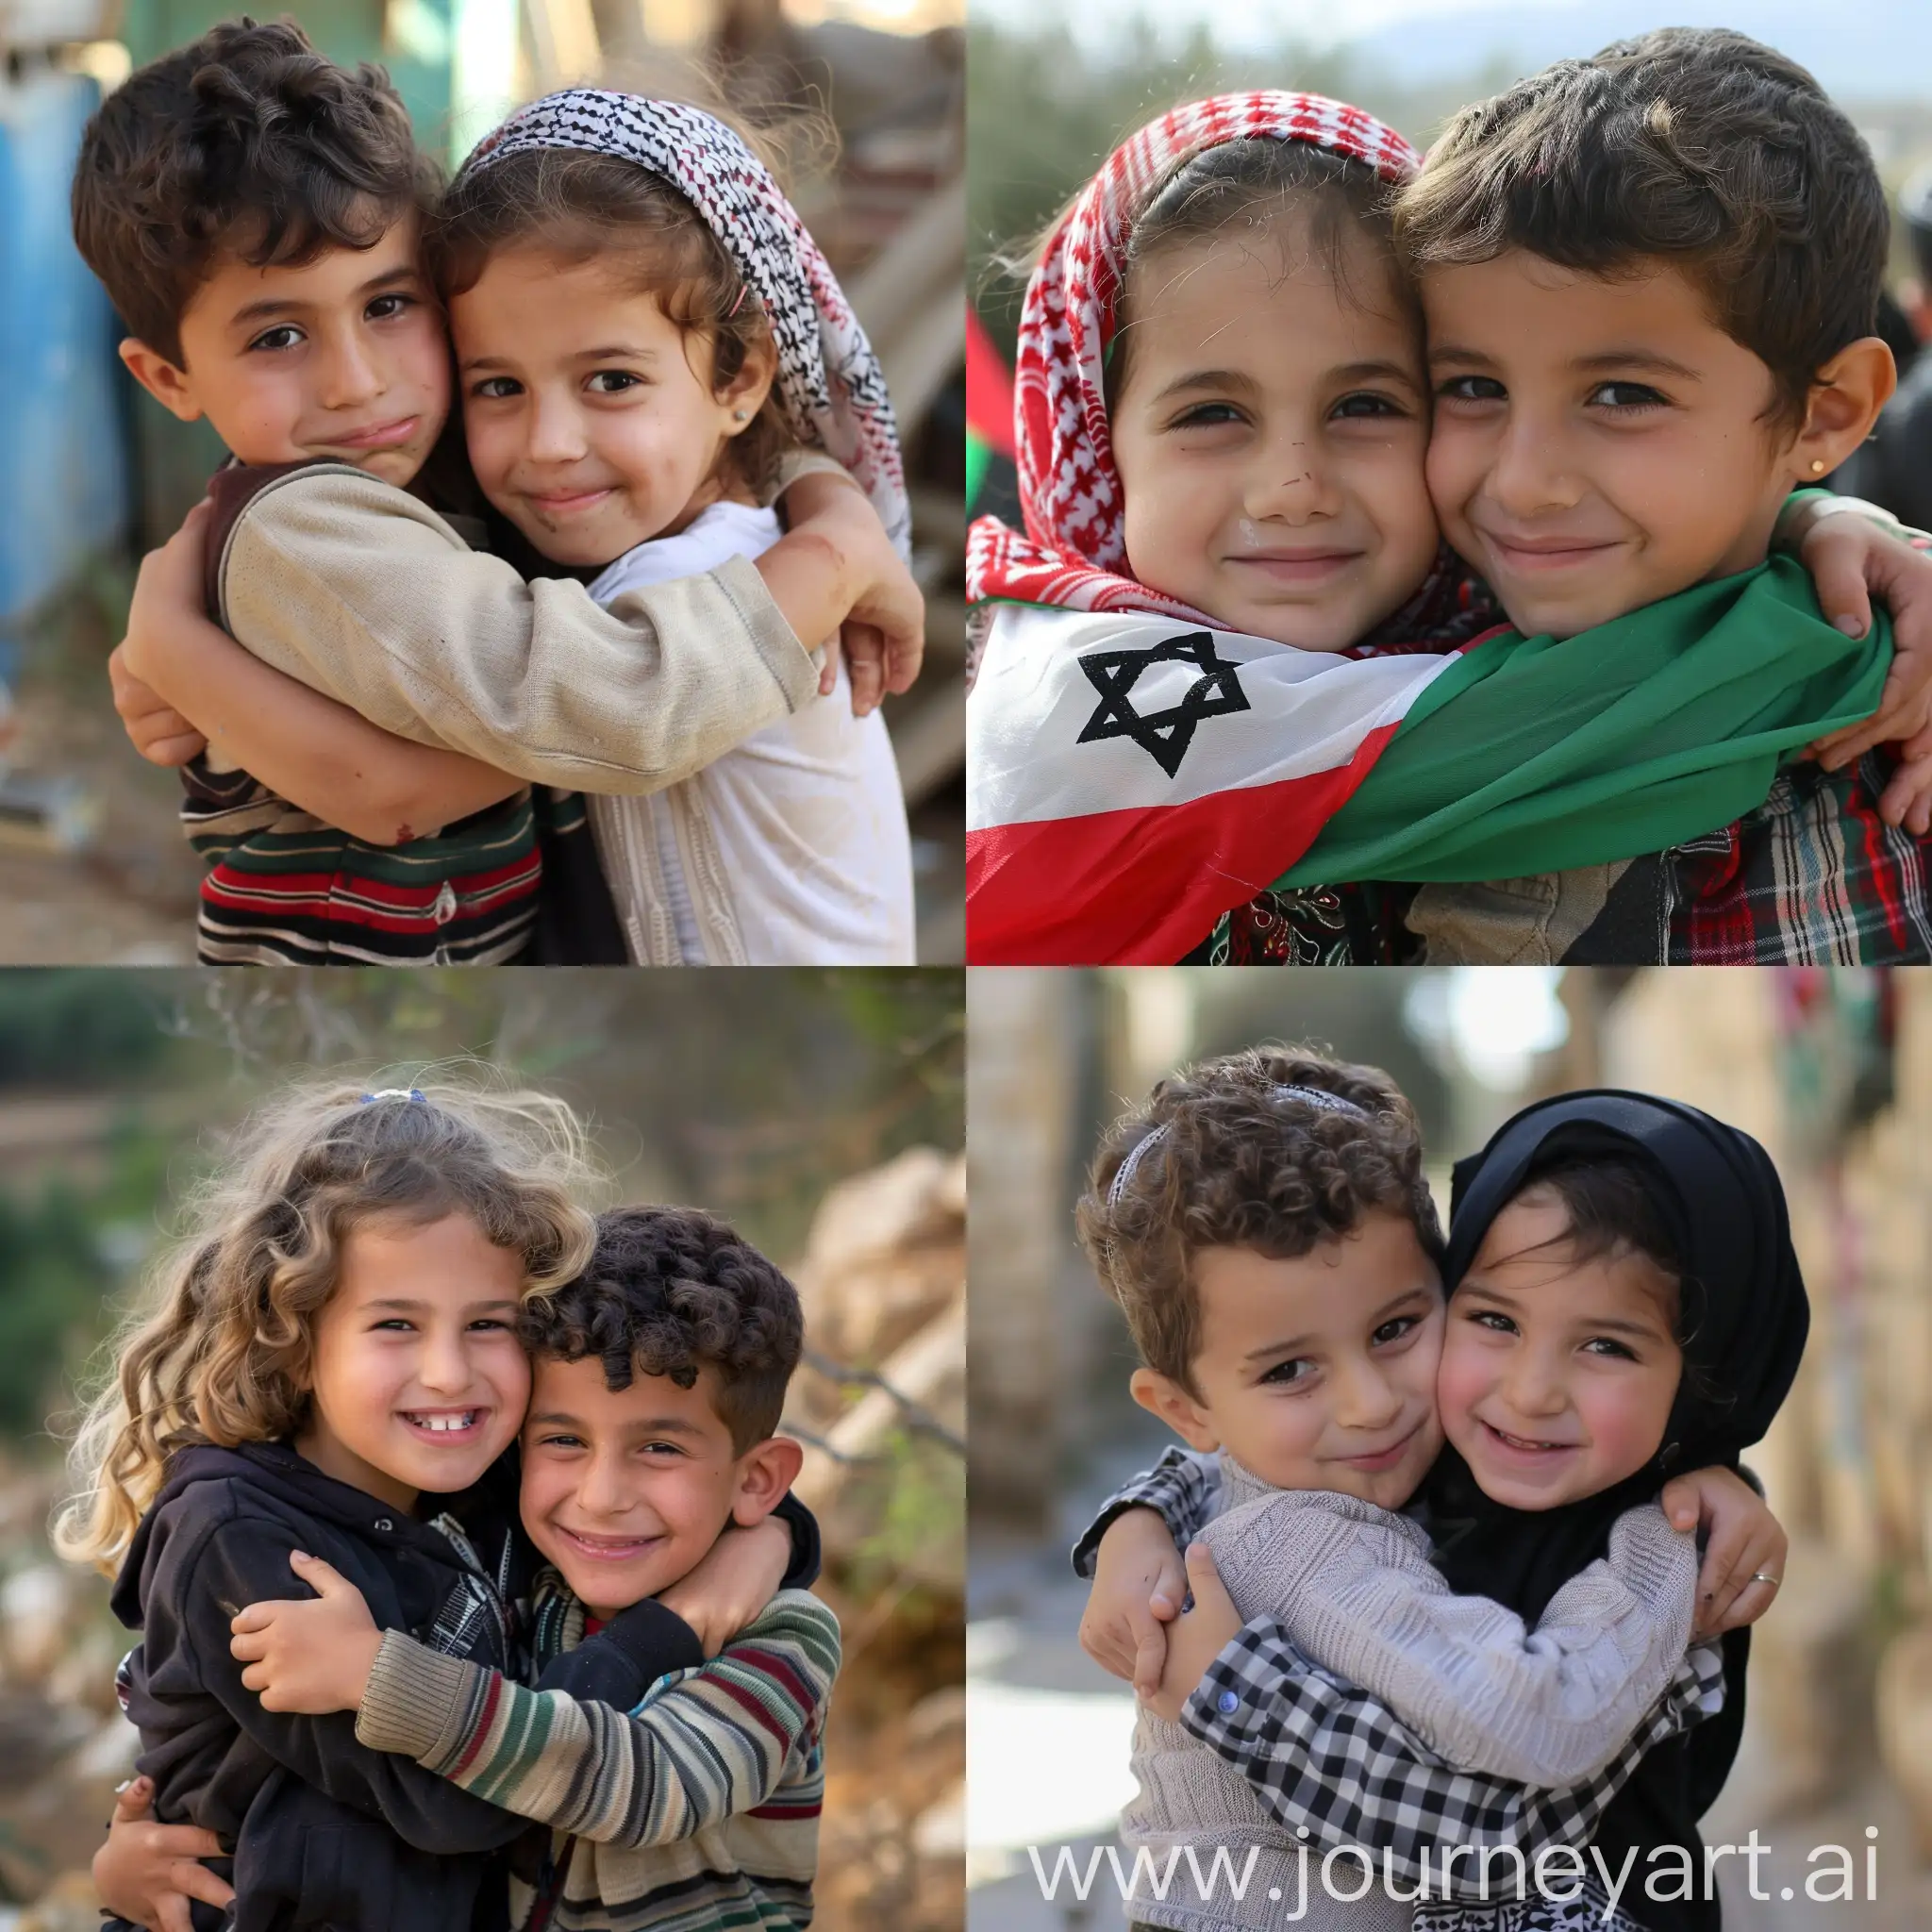 Palestinian and Israeli child friendship